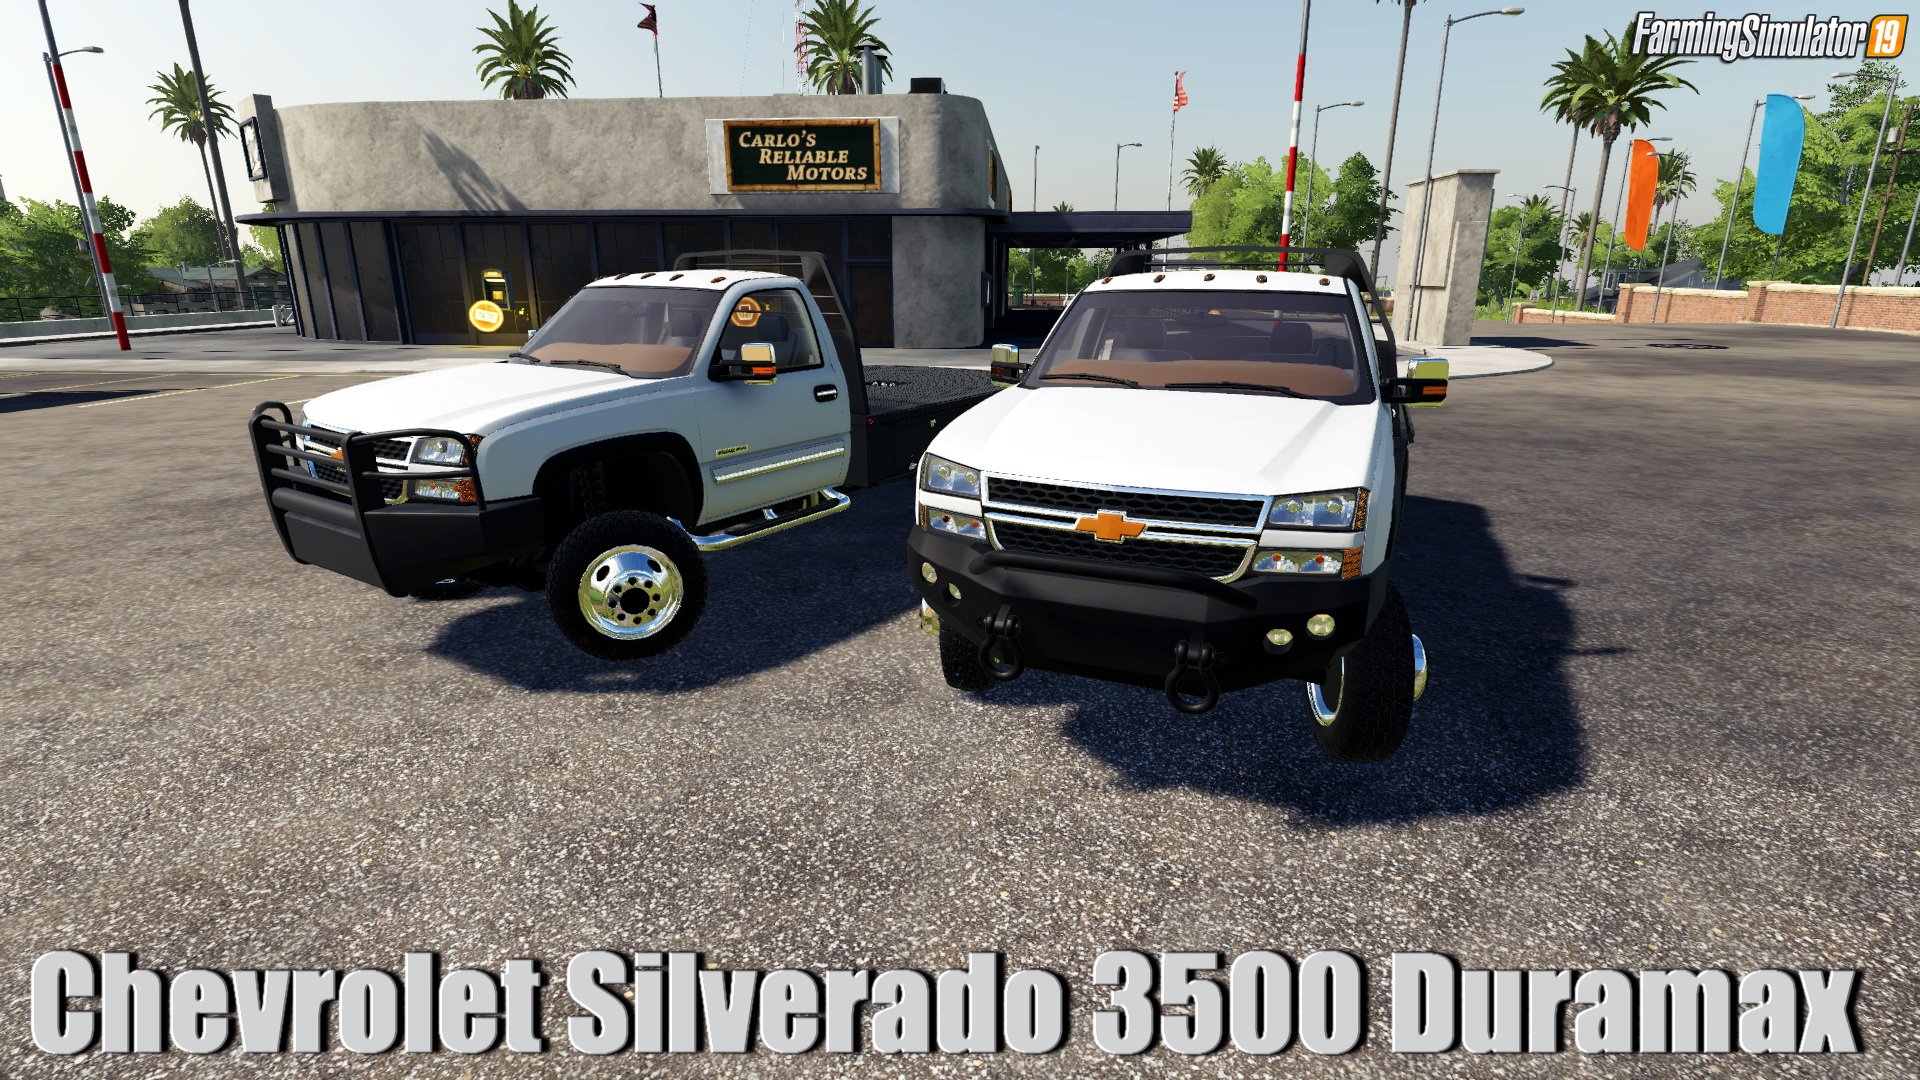 Chevrolet Silverado 3500 Duramax v1.0 for FS19